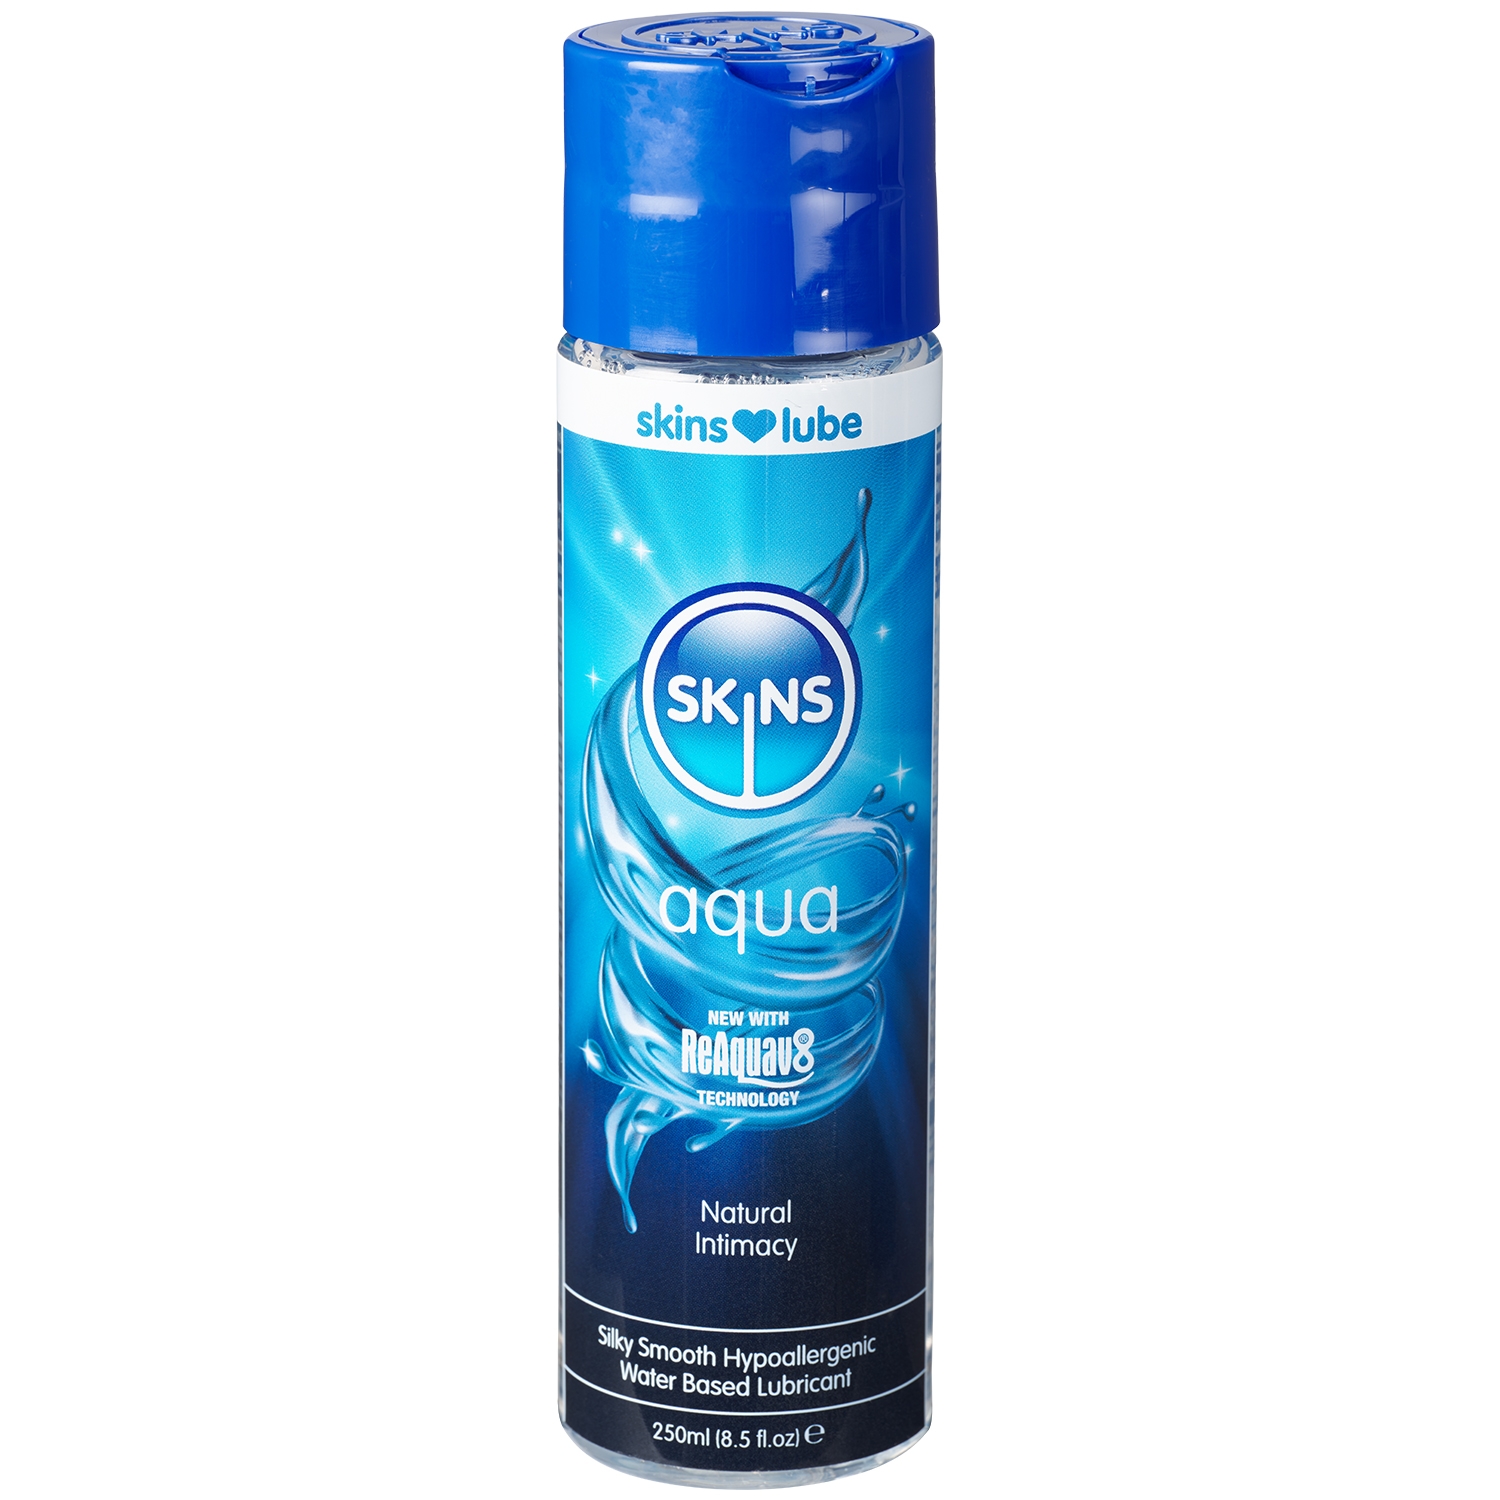 Skins Aqua Vandbaseret Glidecreme 250 ml     - Klar thumbnail